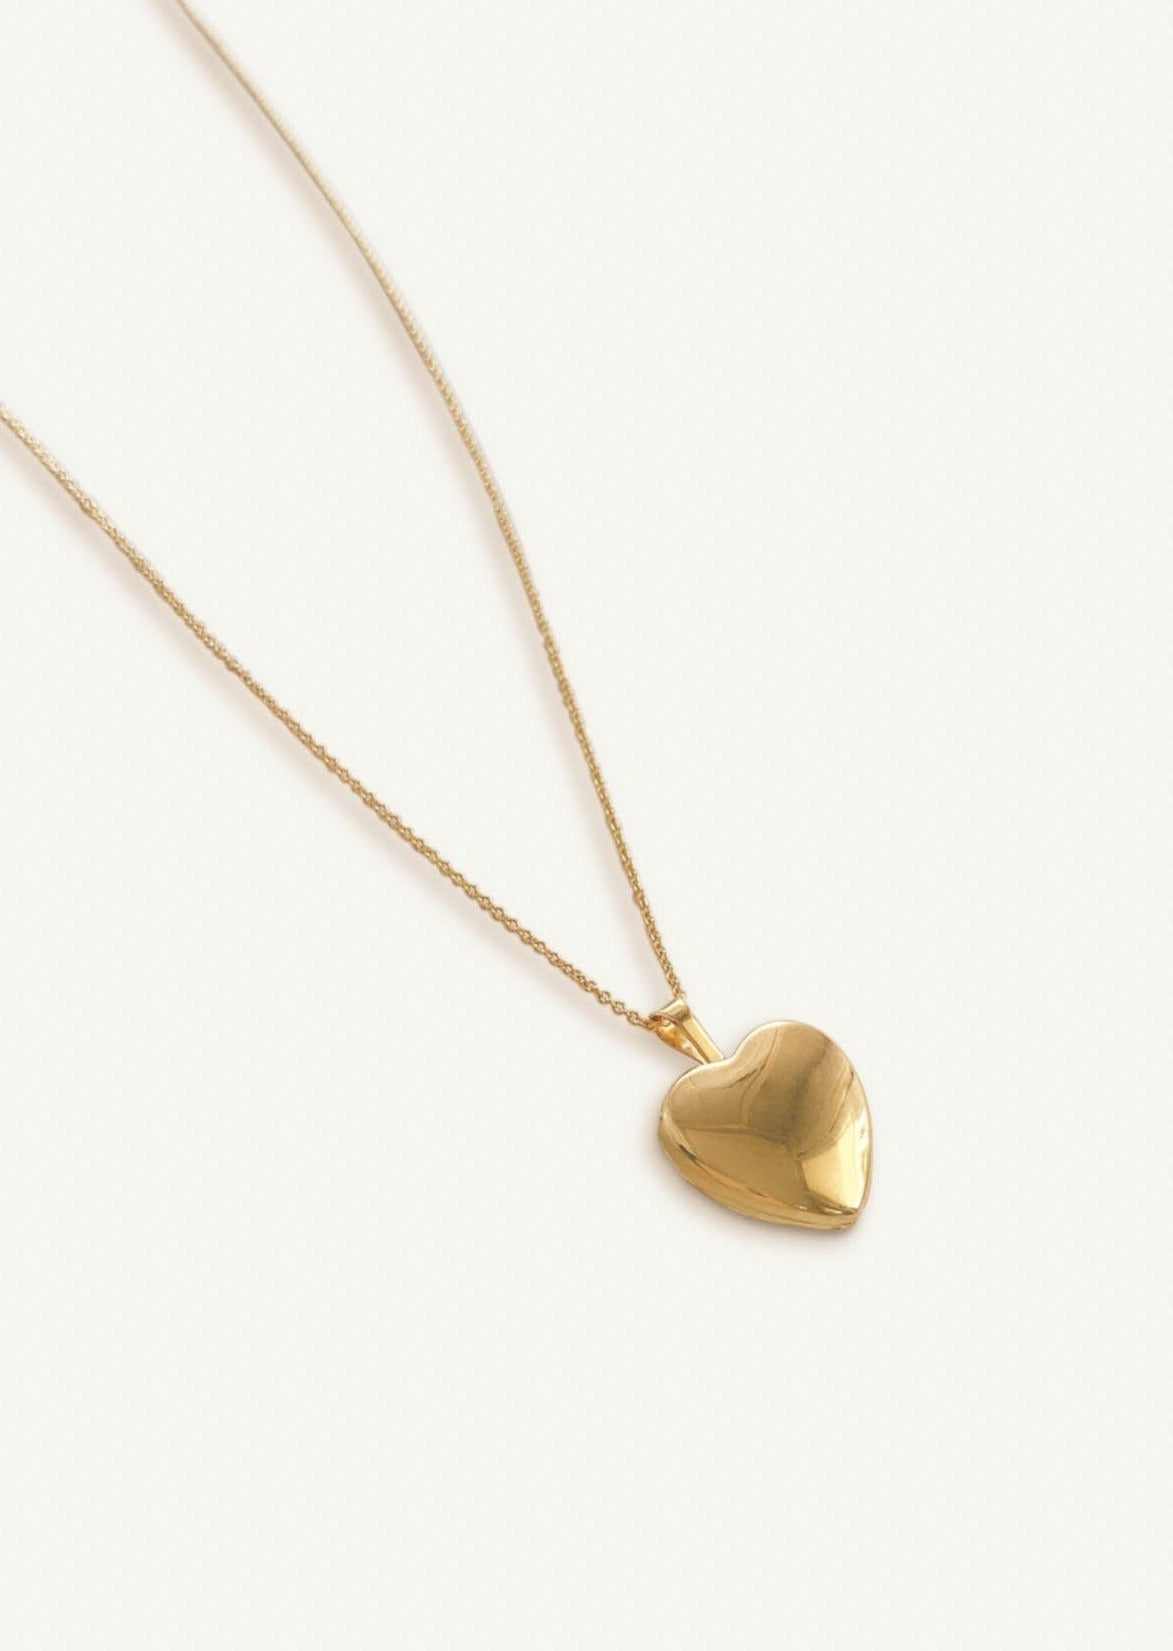 Maison Heart Locket Necklace I - Kinn Box Chain / 24